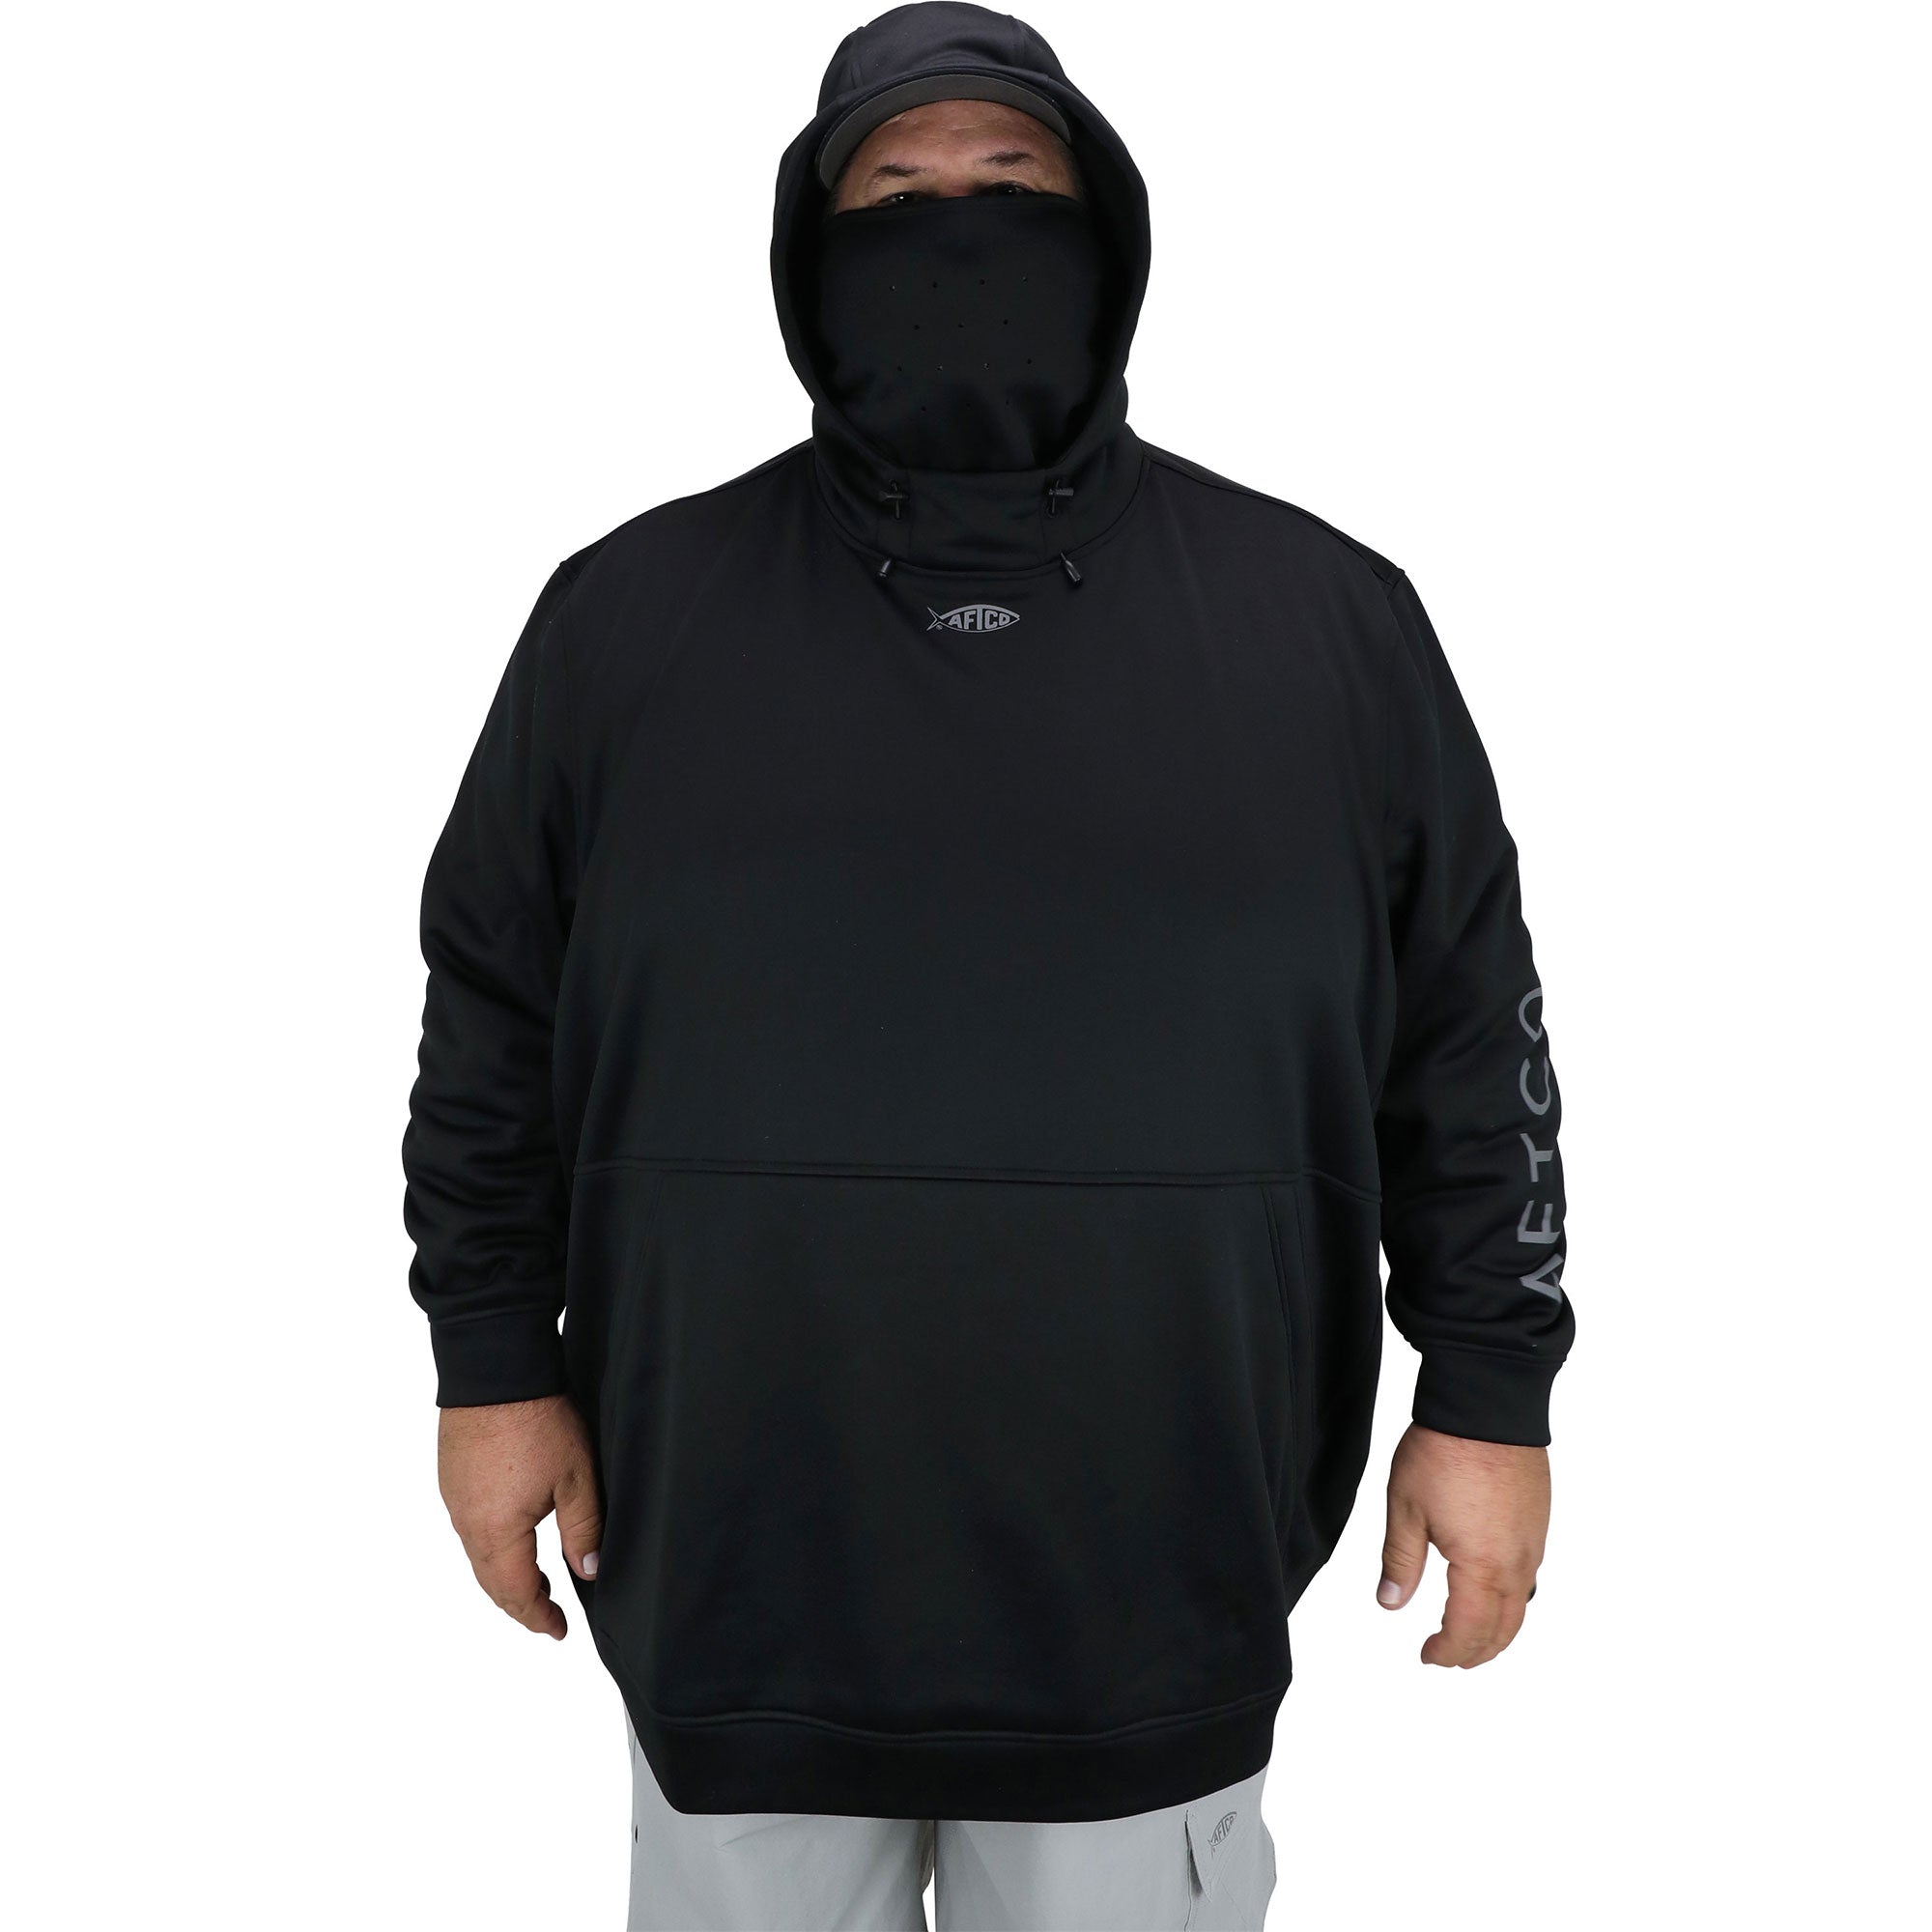 AFTCO Big Guy Reaper Technical Sweatshirt - Black - 5X